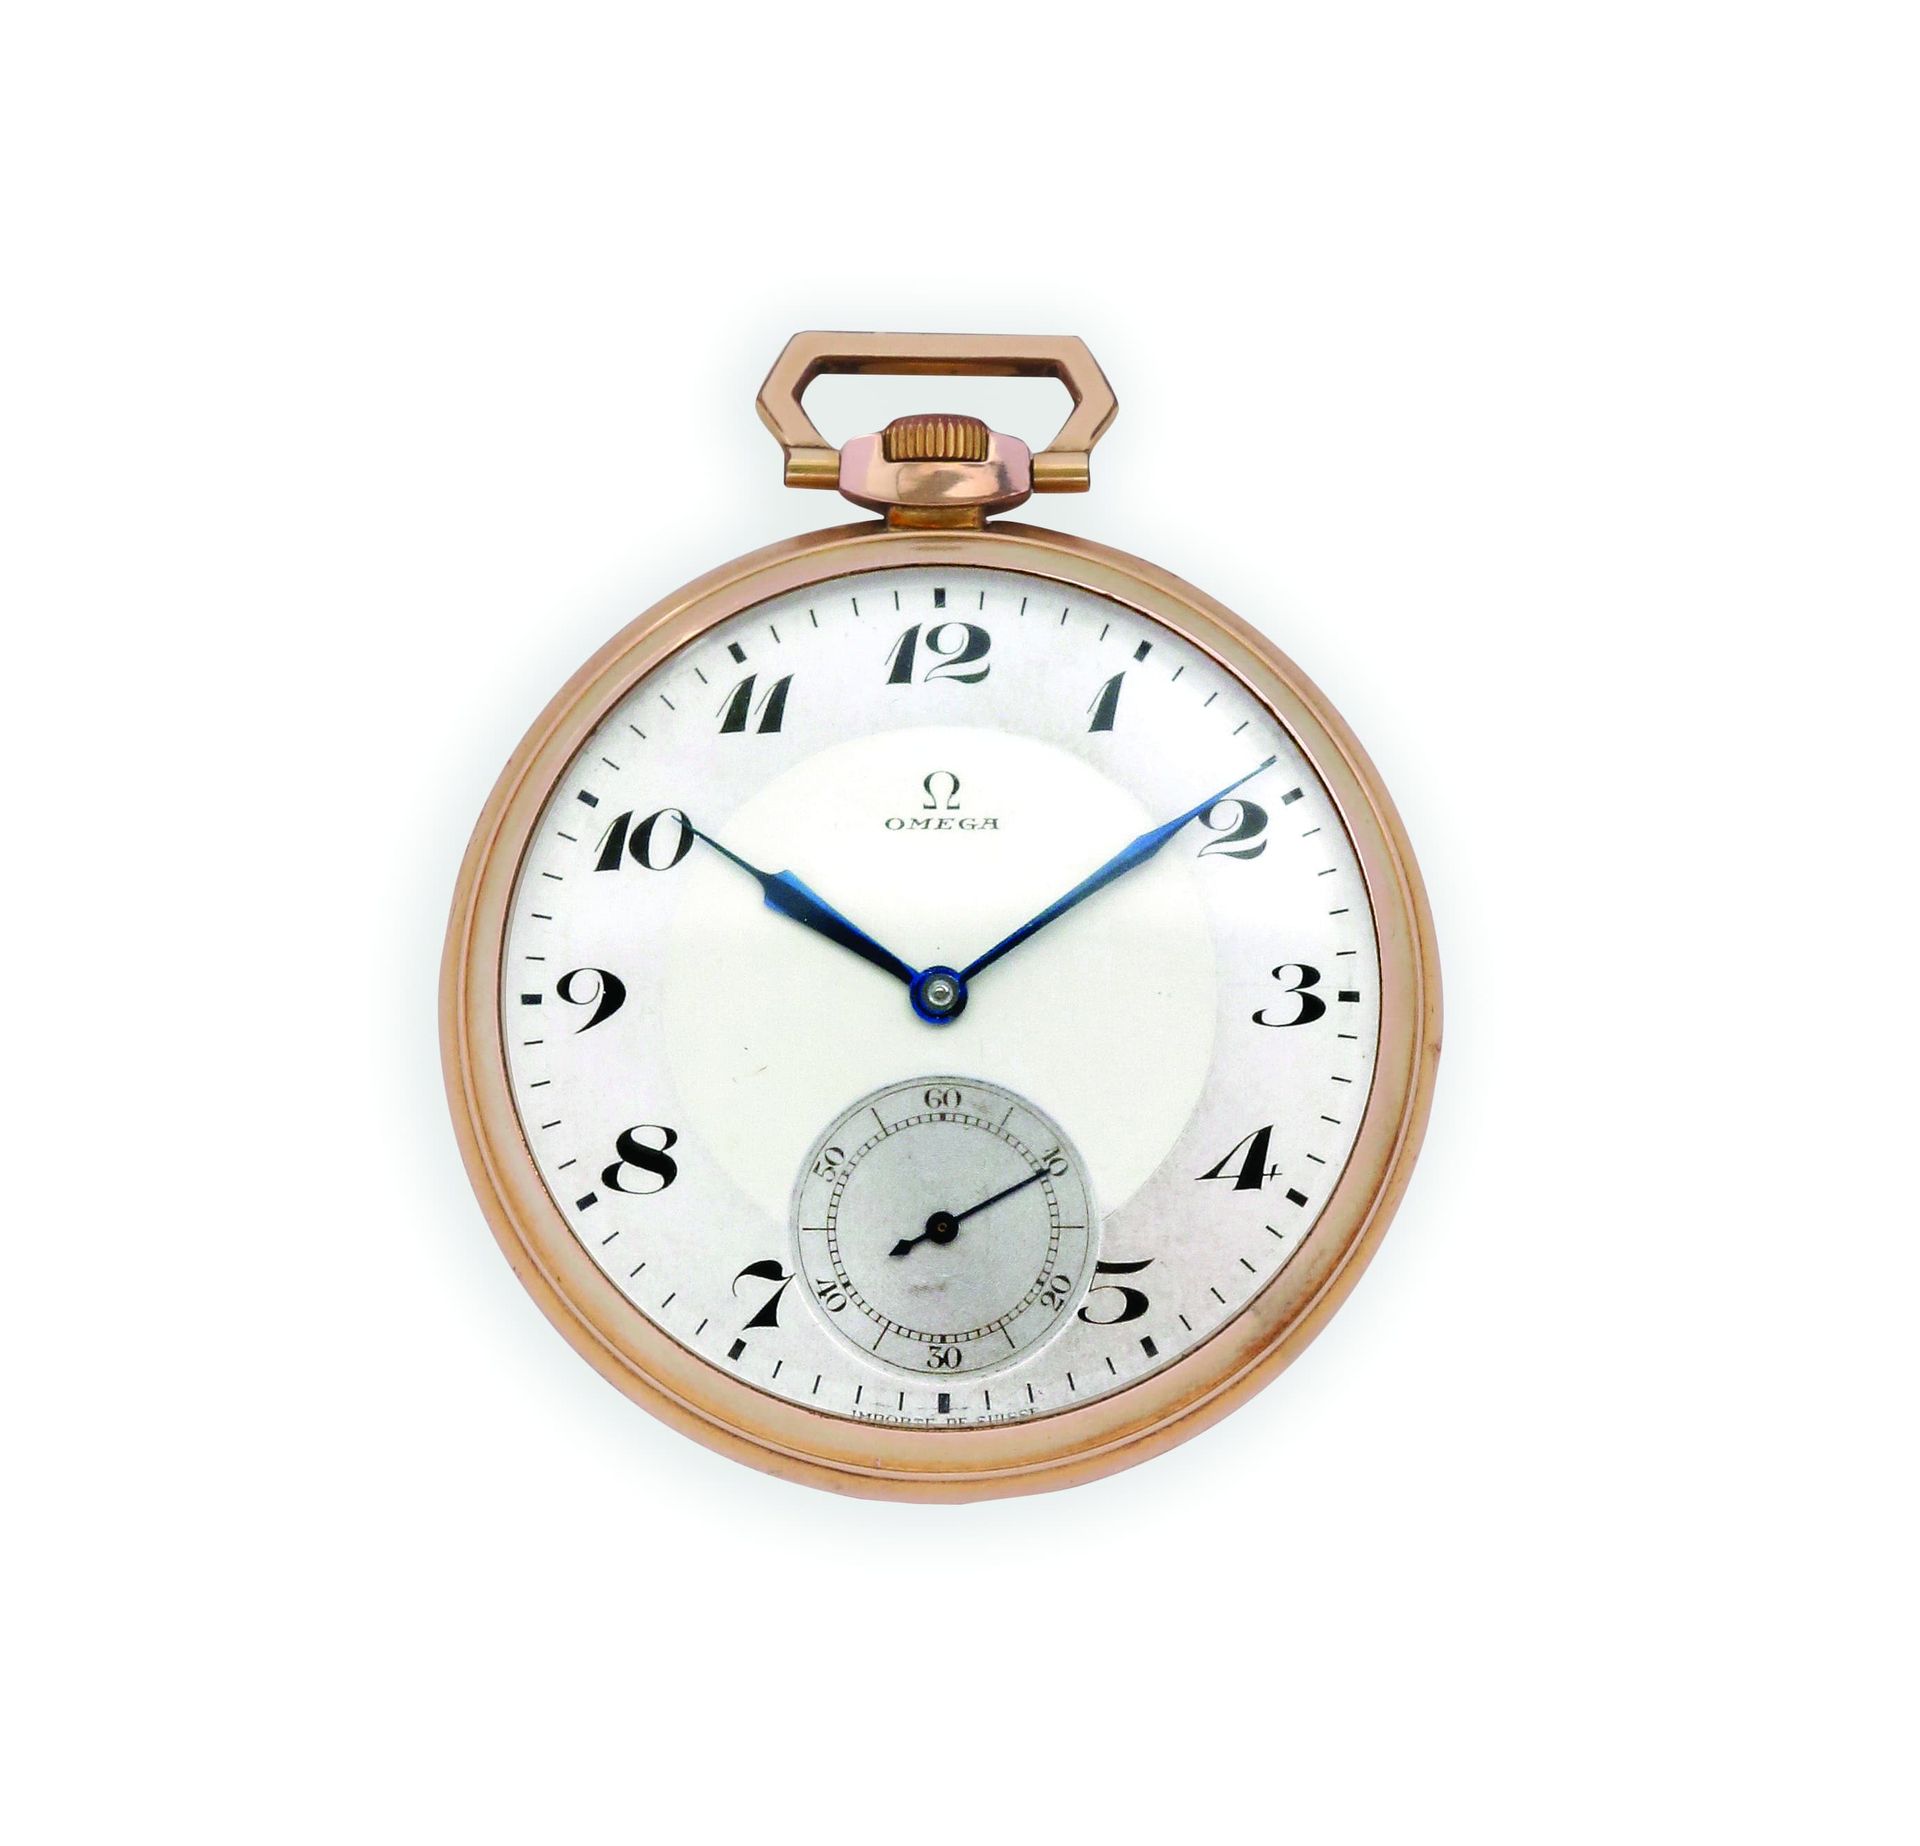 OMEGA Art Déco
Reloj de bolsillo dorado con movimiento mecánico - Caja redonda, &hellip;